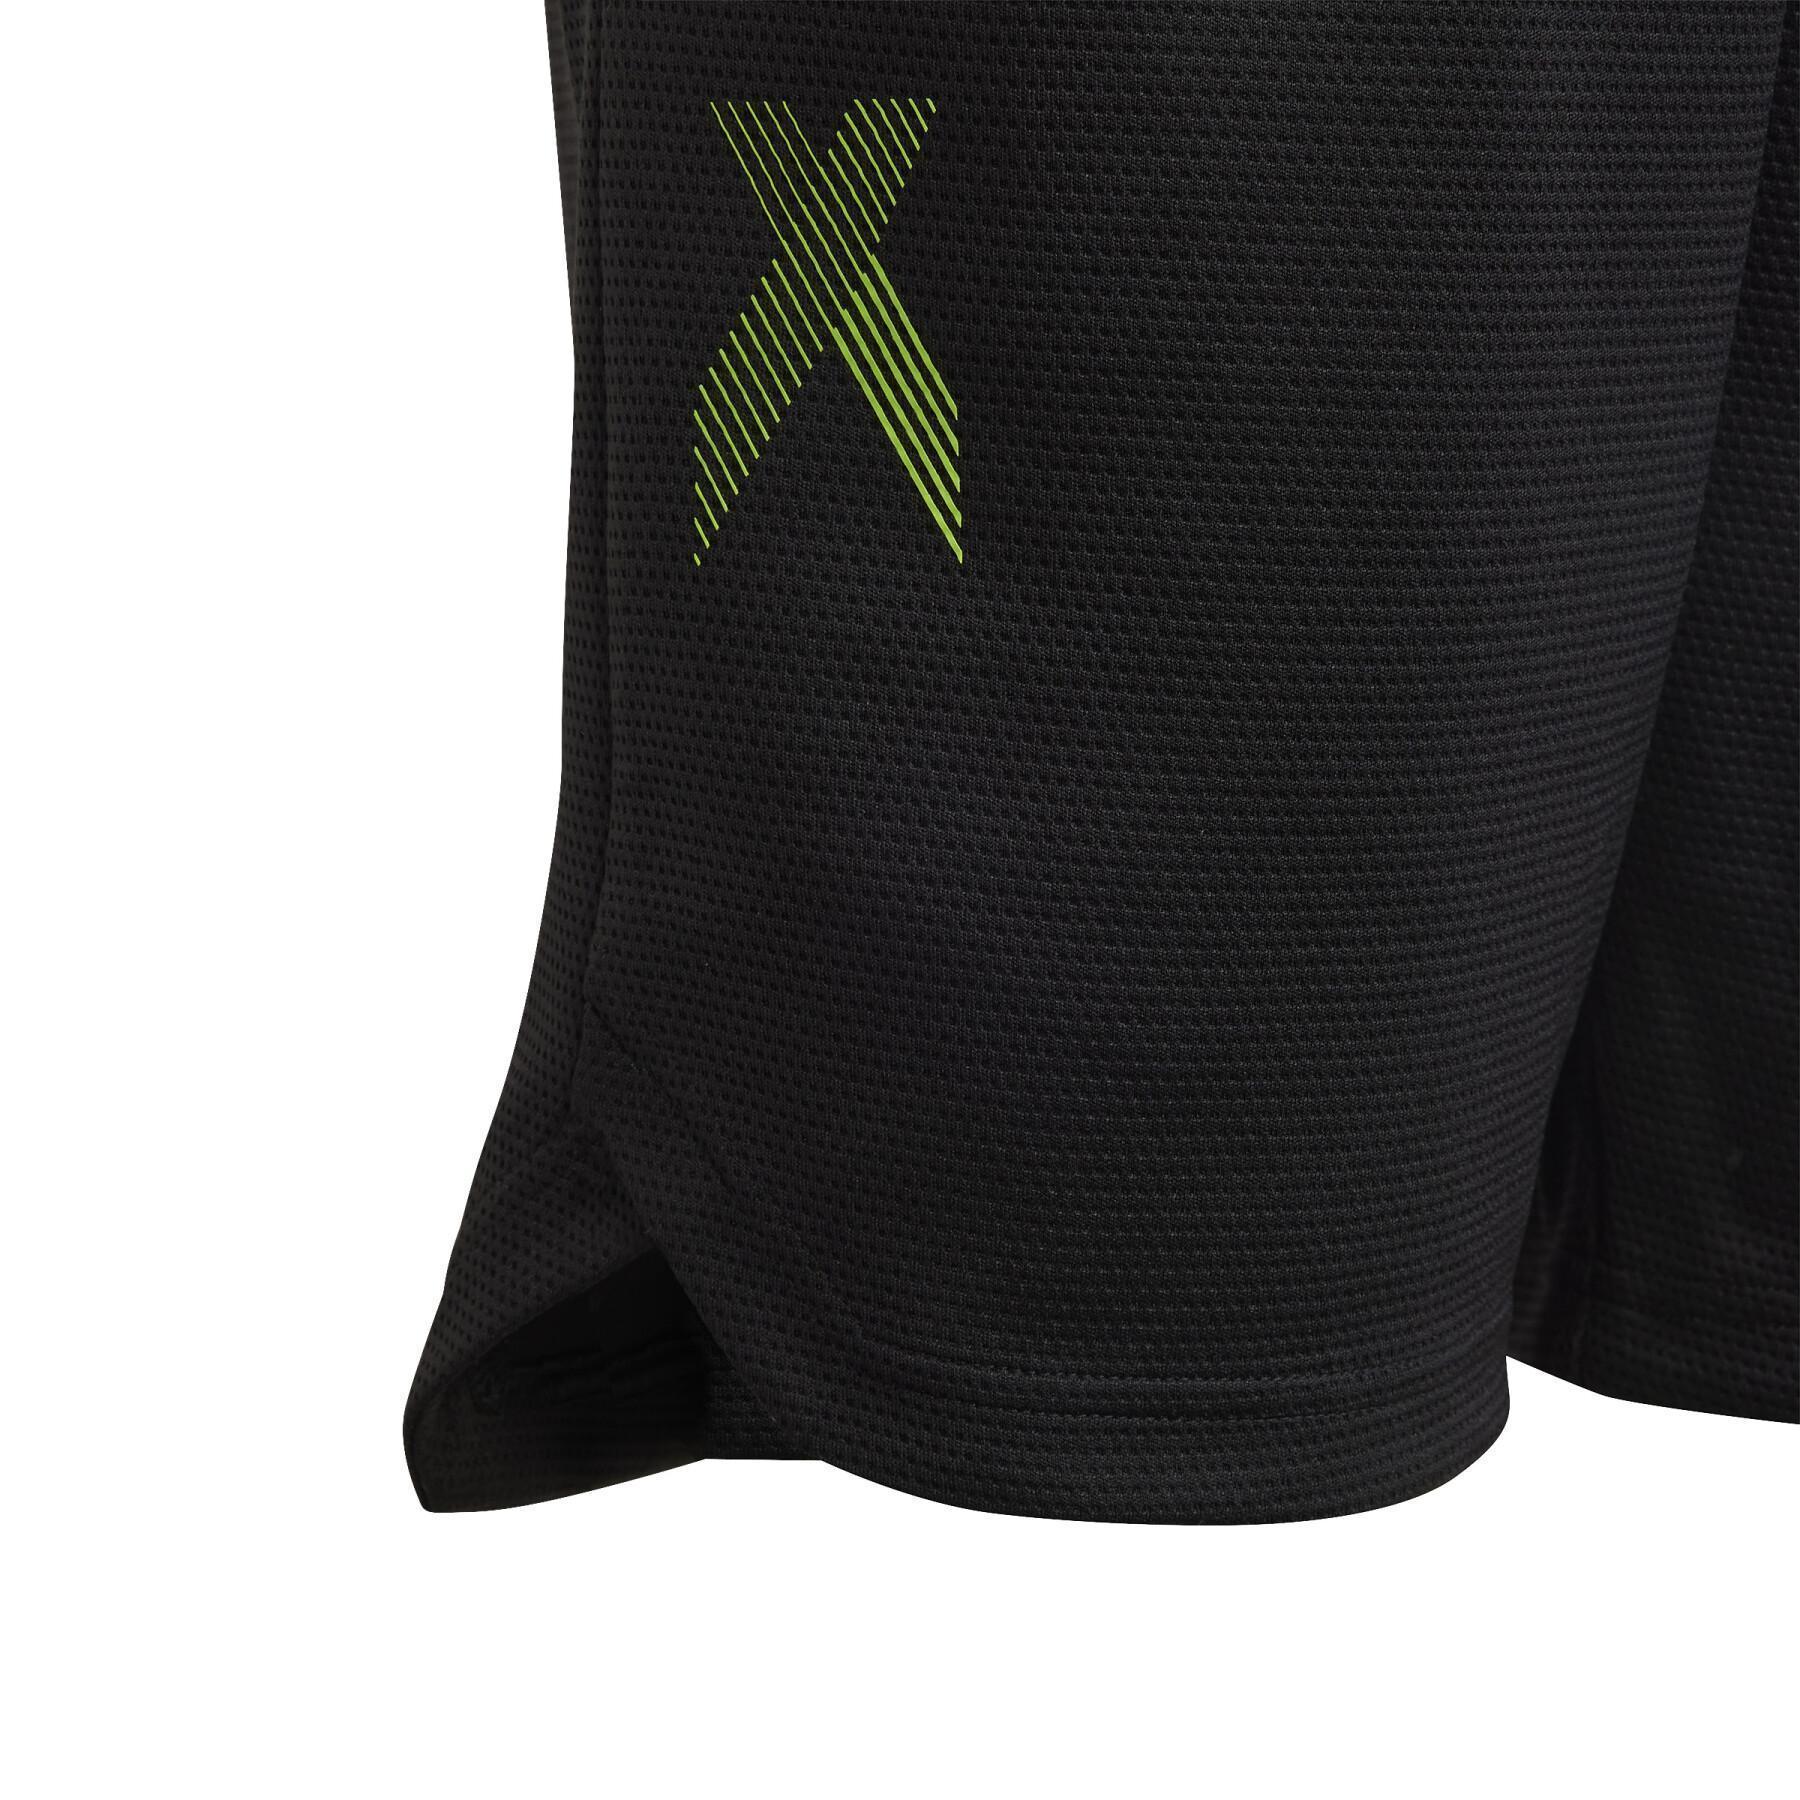 Kinder shorts adidas Football-Inspired X